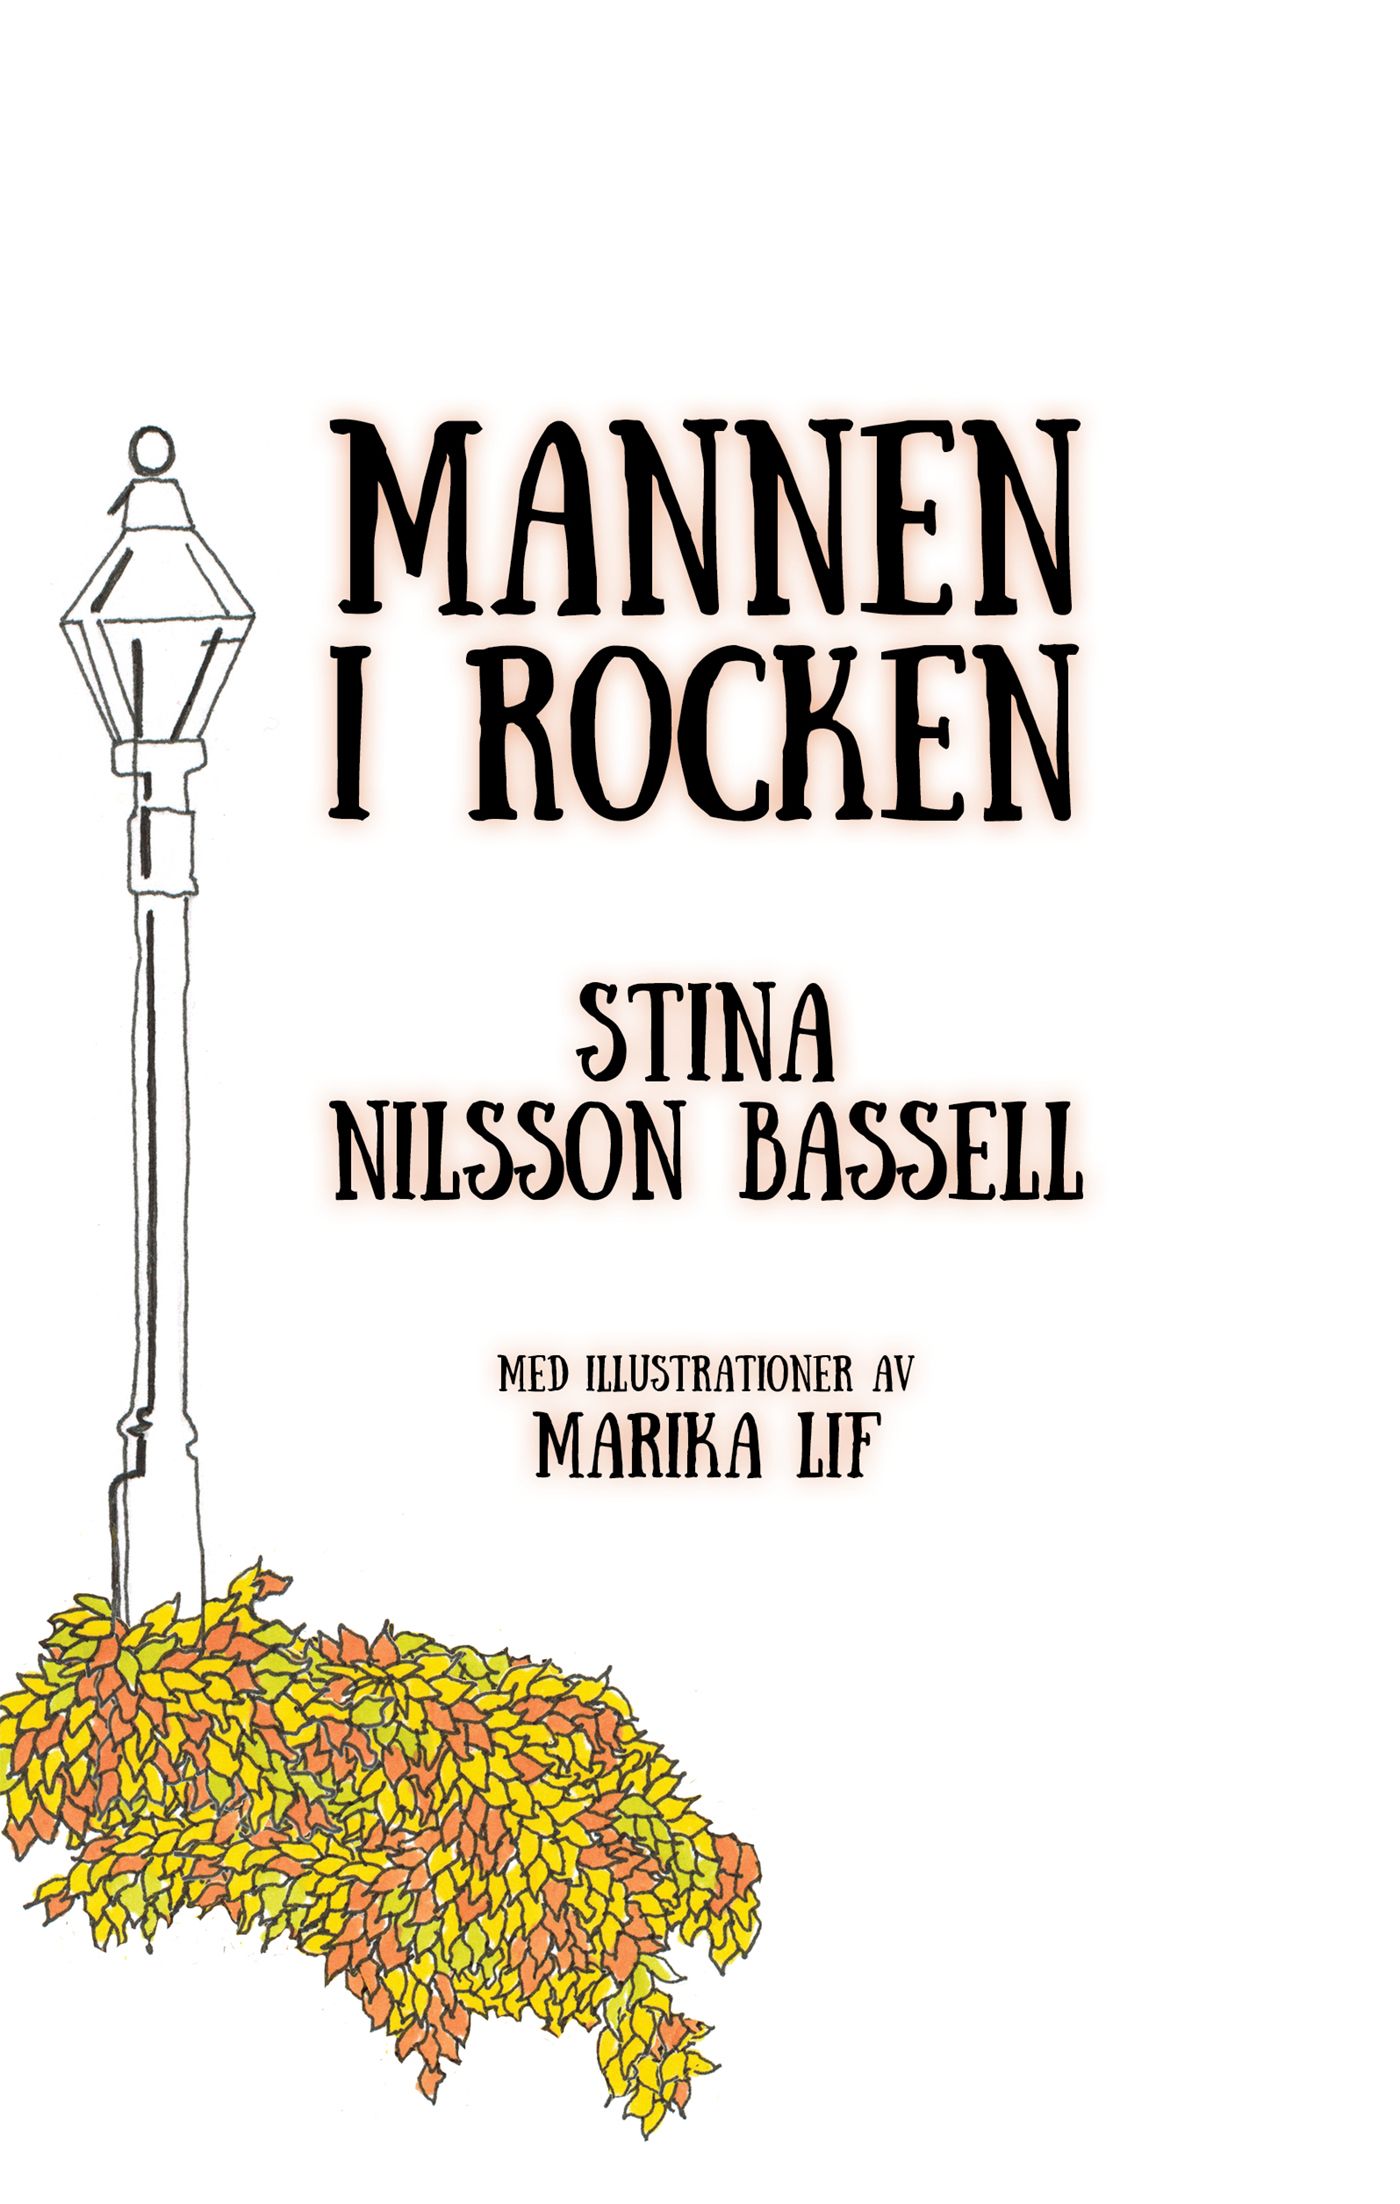 Mannen i rocken, eBook by Stina Nilsson Bassell